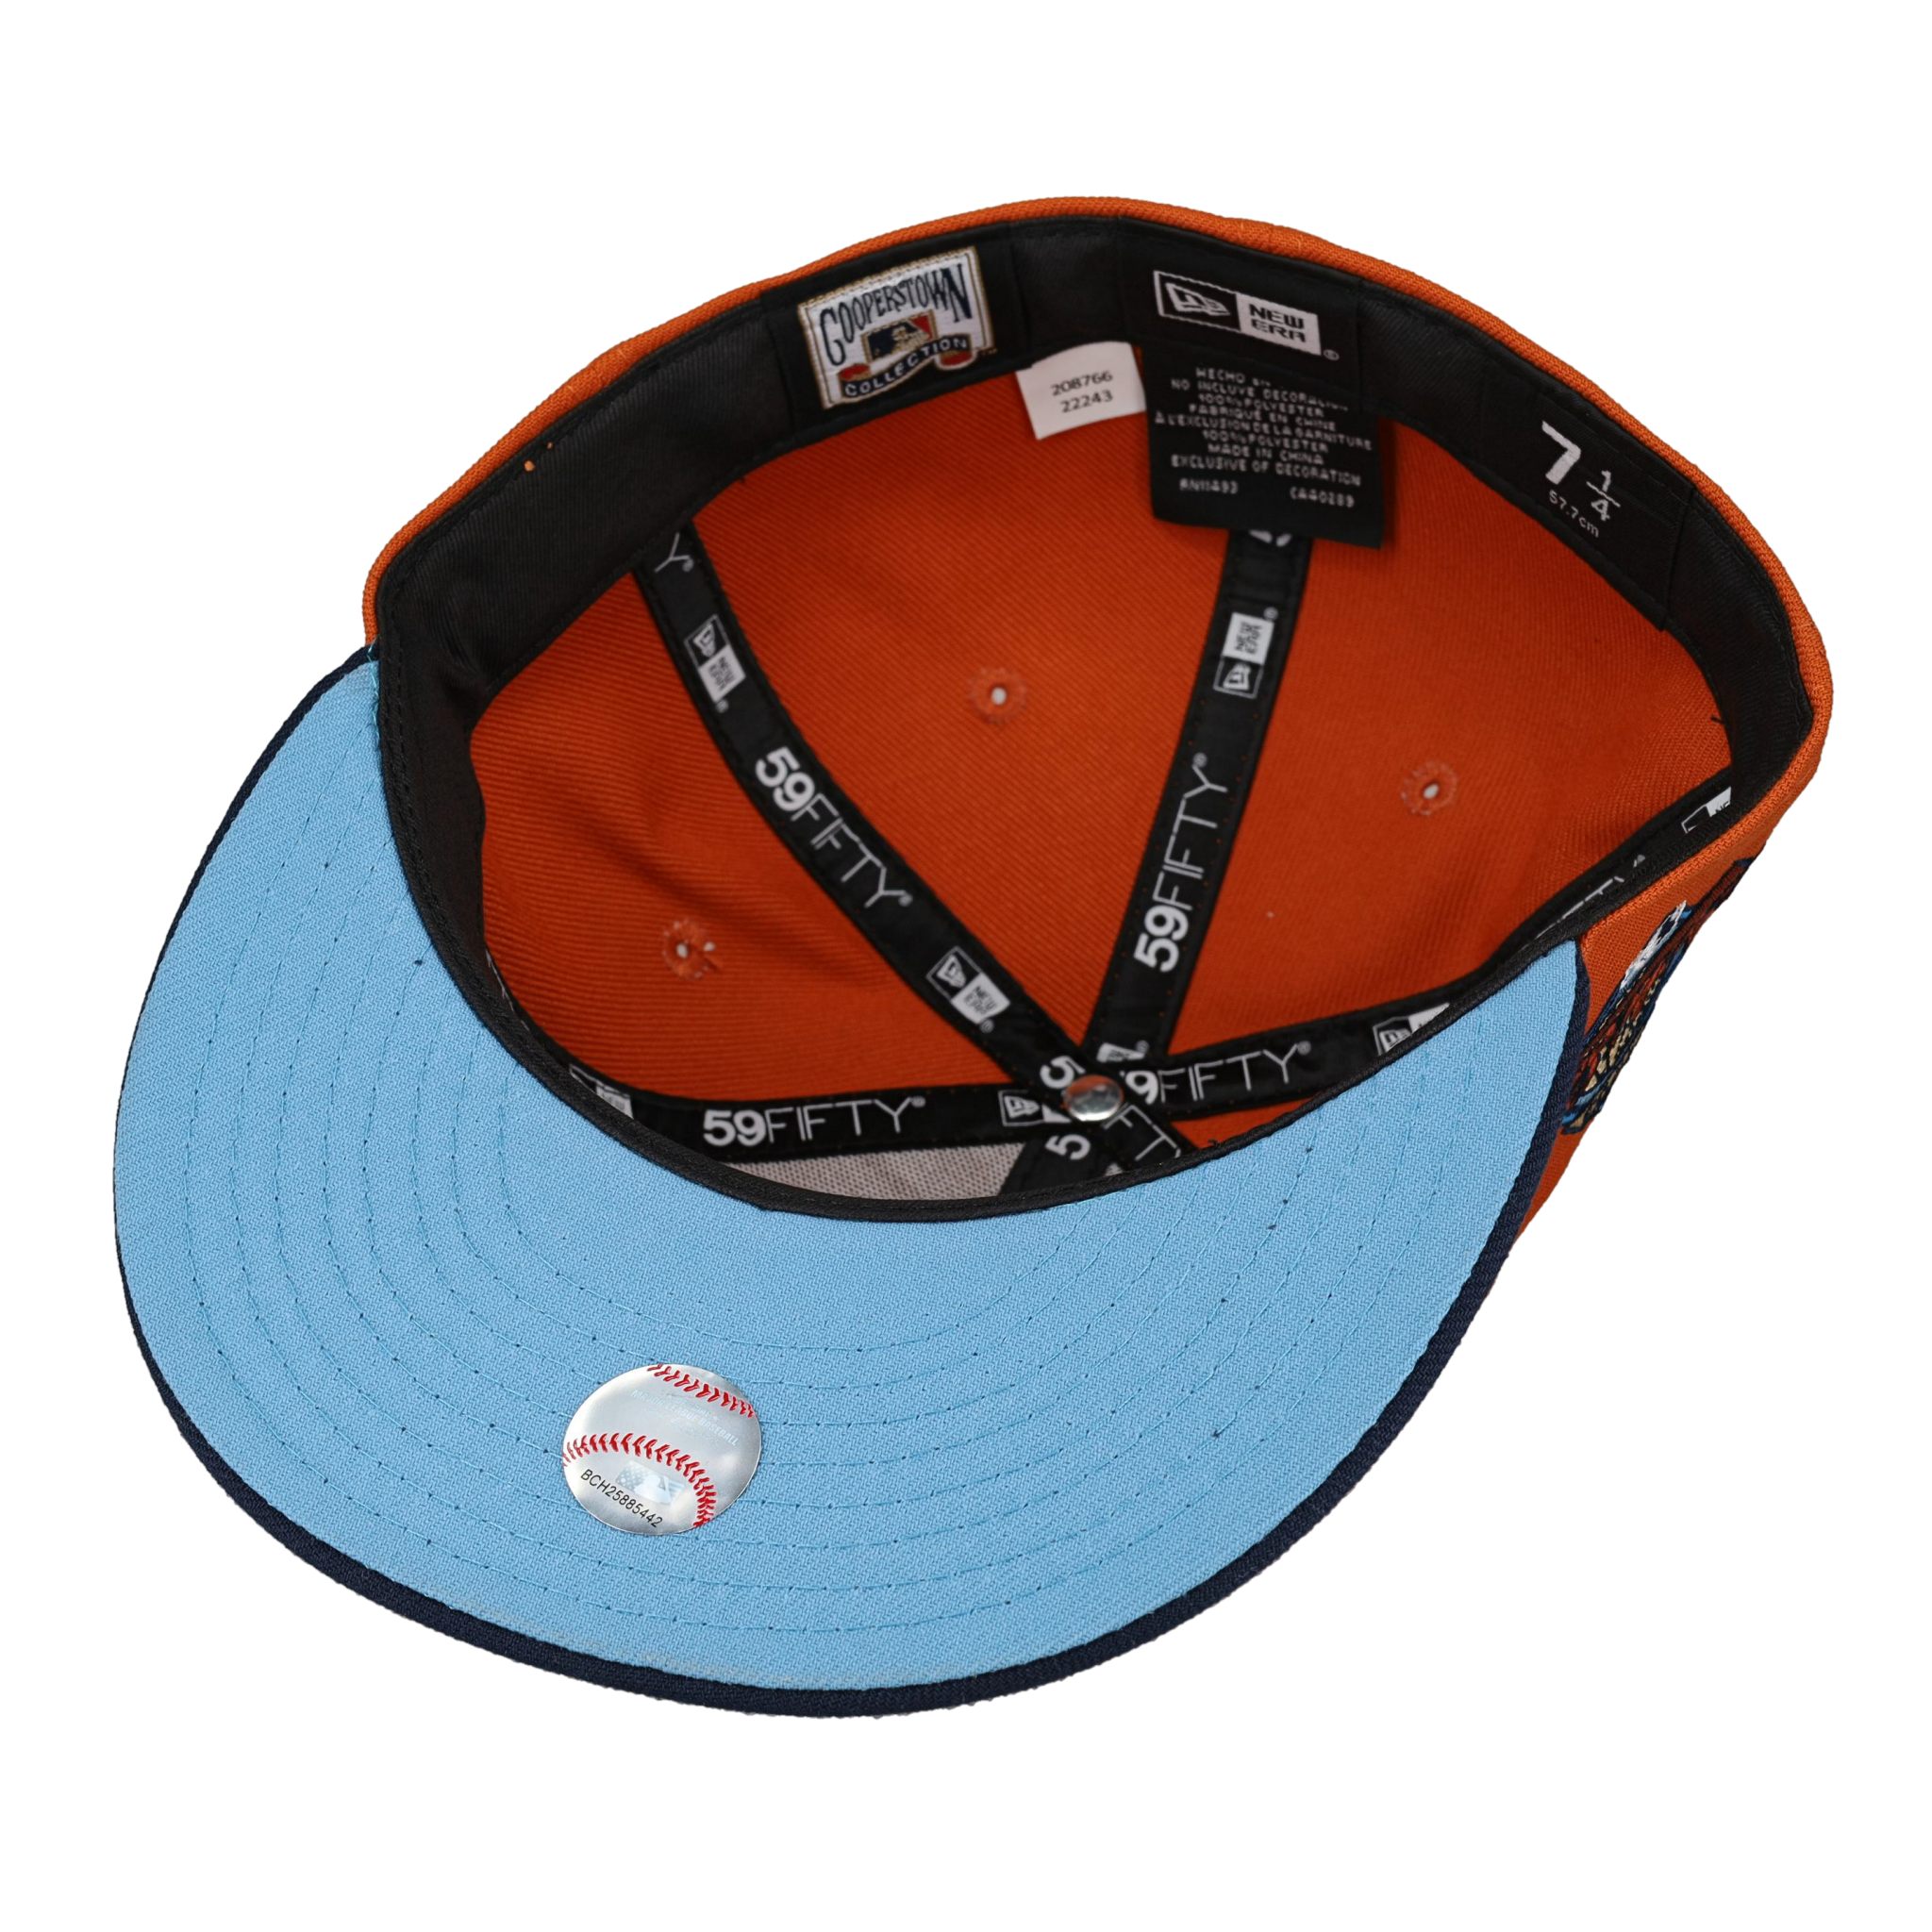 Texas Rangers Arlington Stadium New Era 59Fifty Fitted Hat